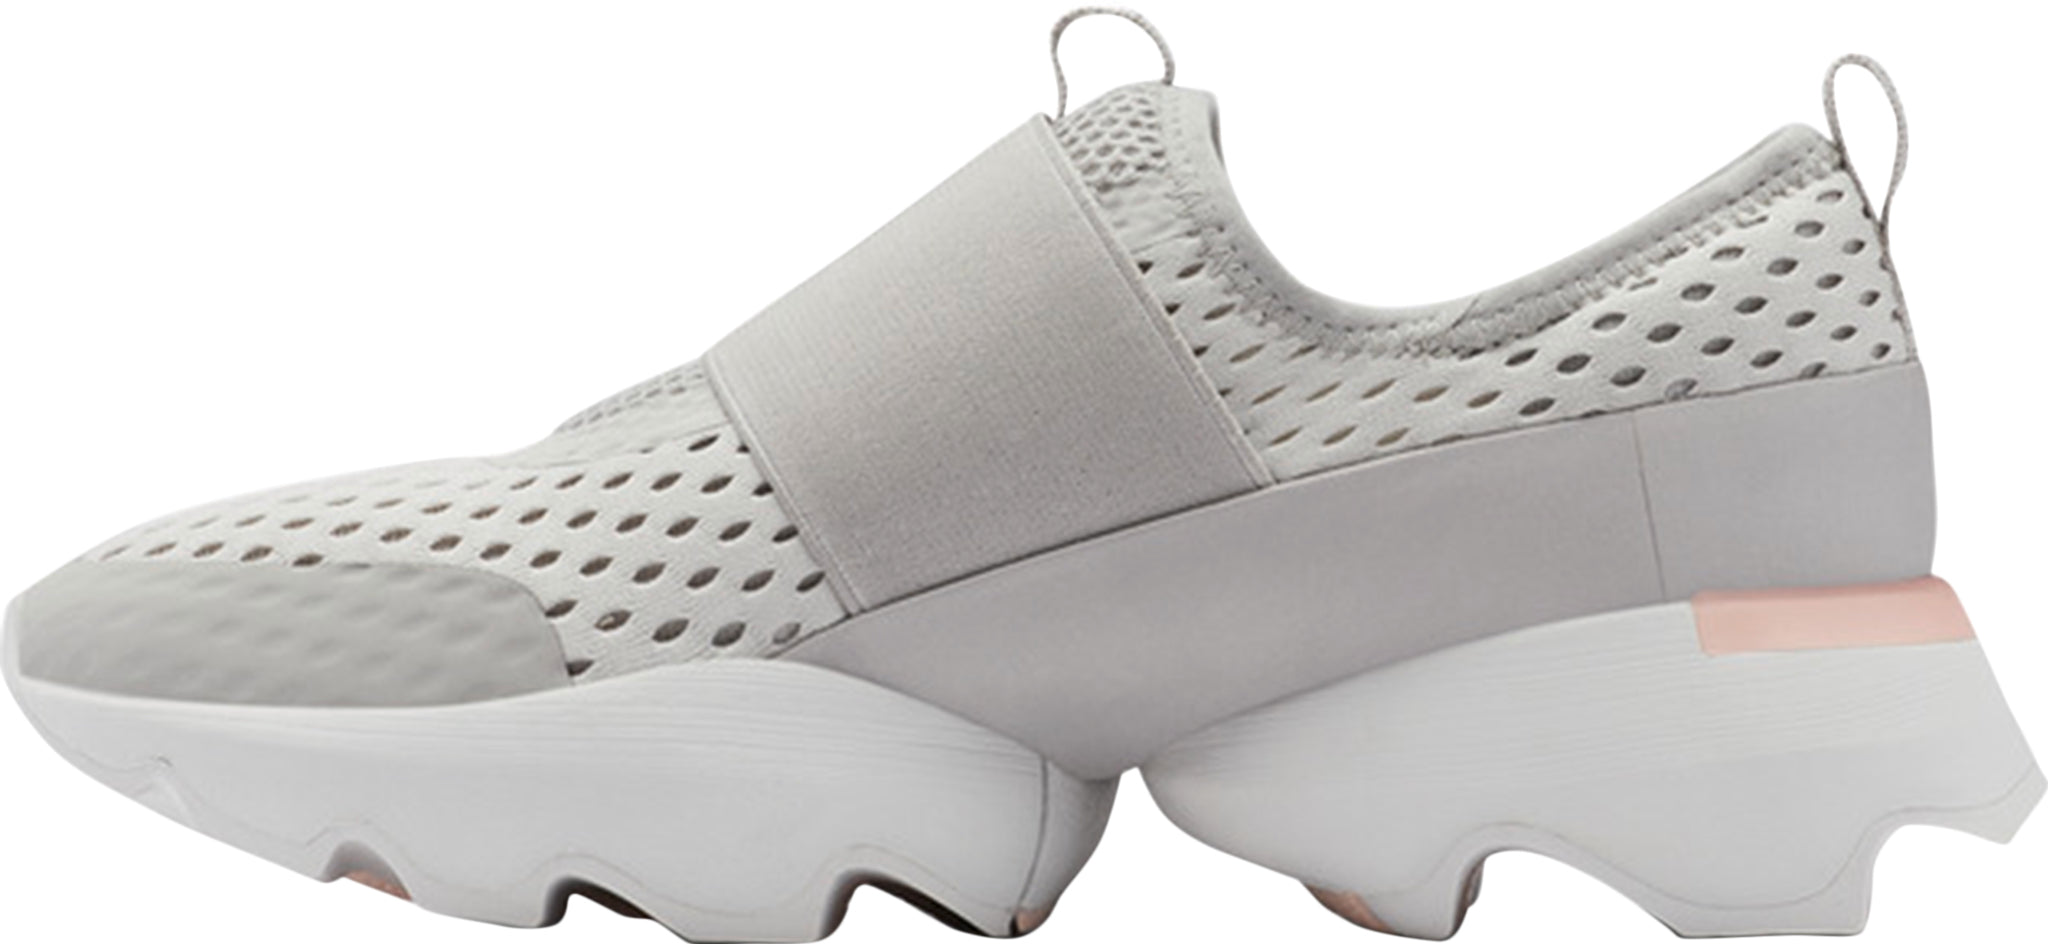 Comfort footwear for Lady. Velcro shoes. AEROBICS | AEROBICS - Real Life  Comfort